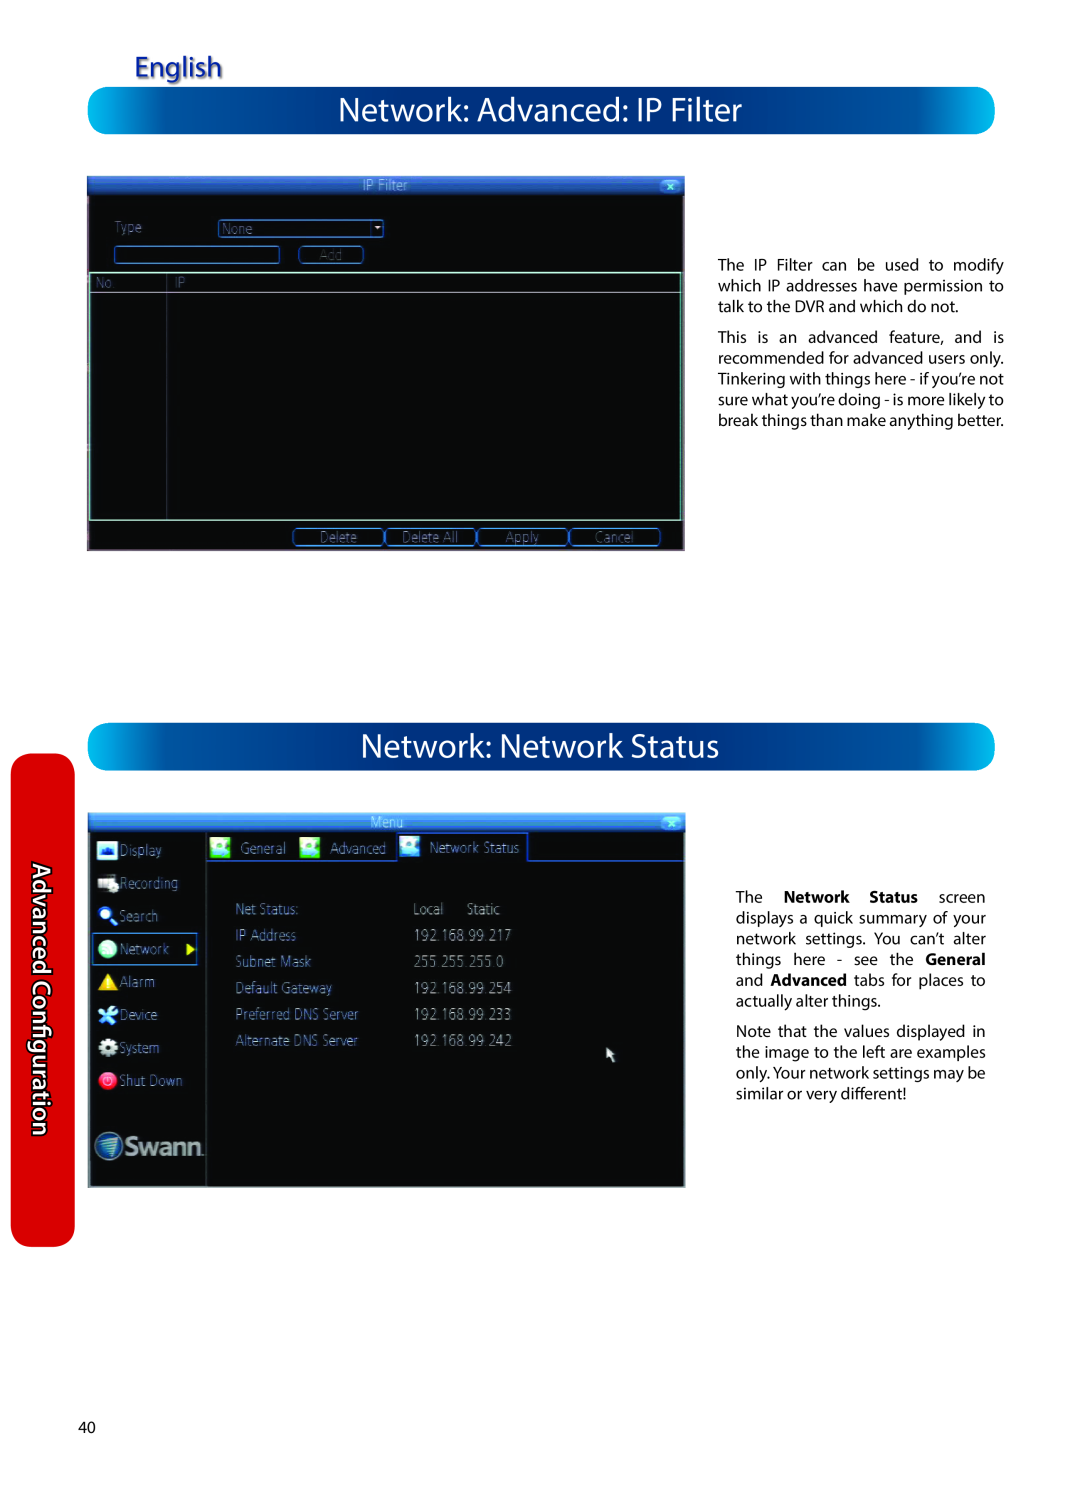 Swann H.264 manual Network: Advanced: IP Filter, Network: Network Status, English, Advanced Configuration 